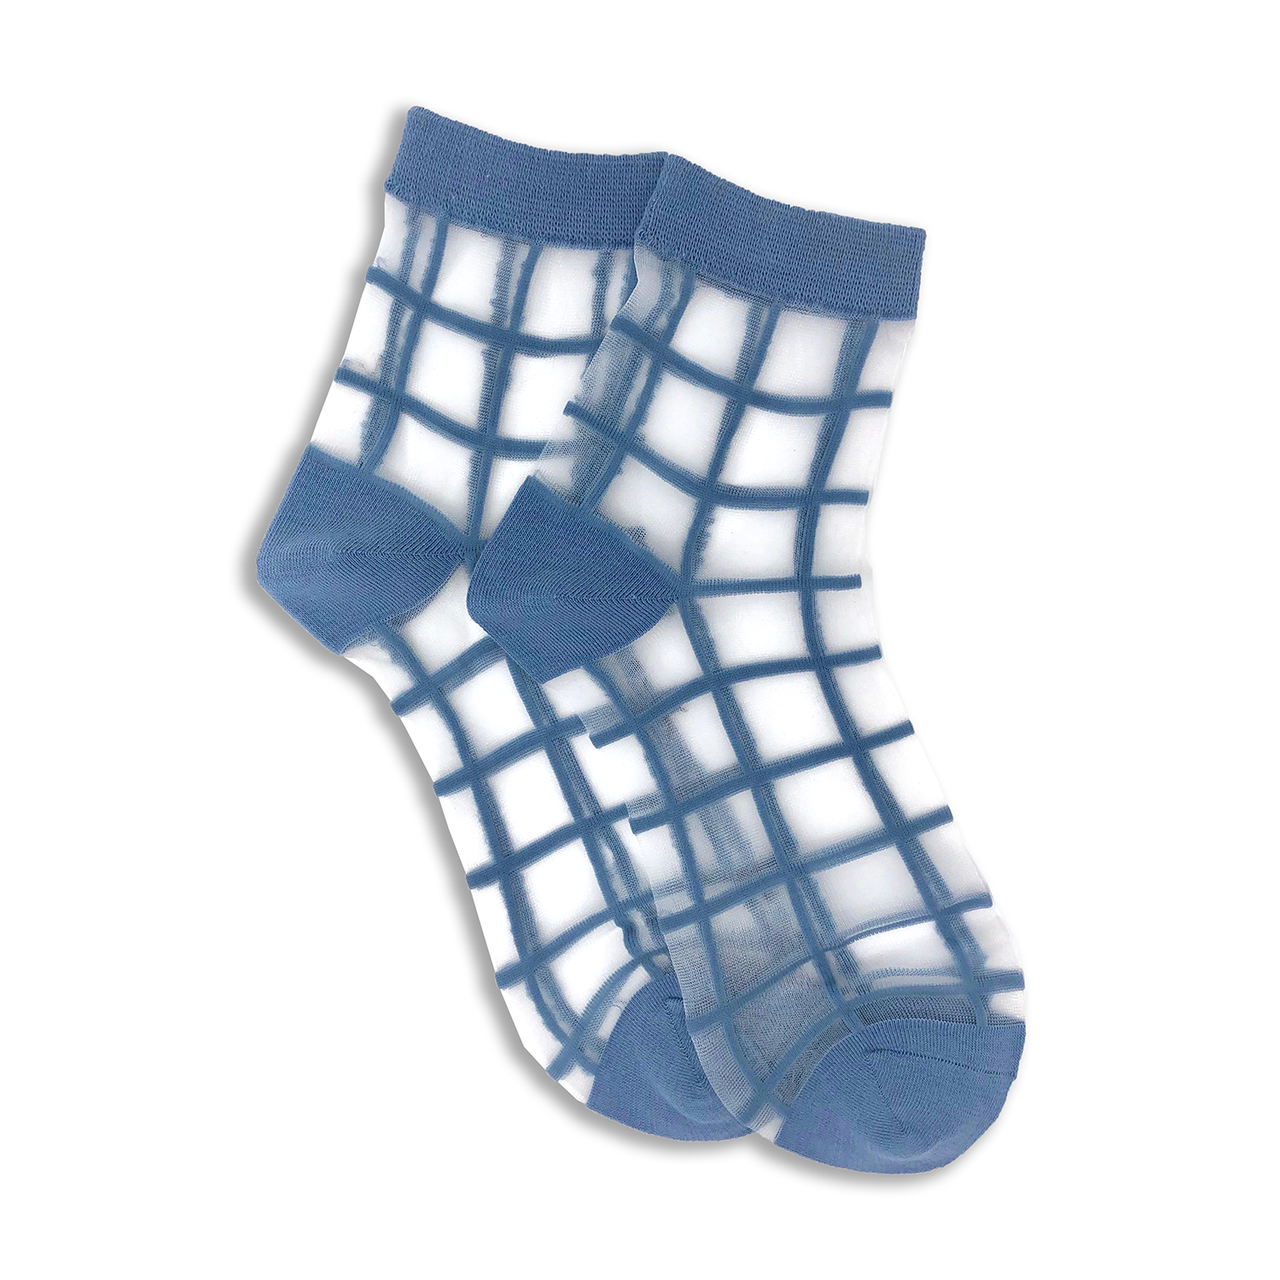 Drake General Store - Sheer Windowpane Socks - Powder Blue